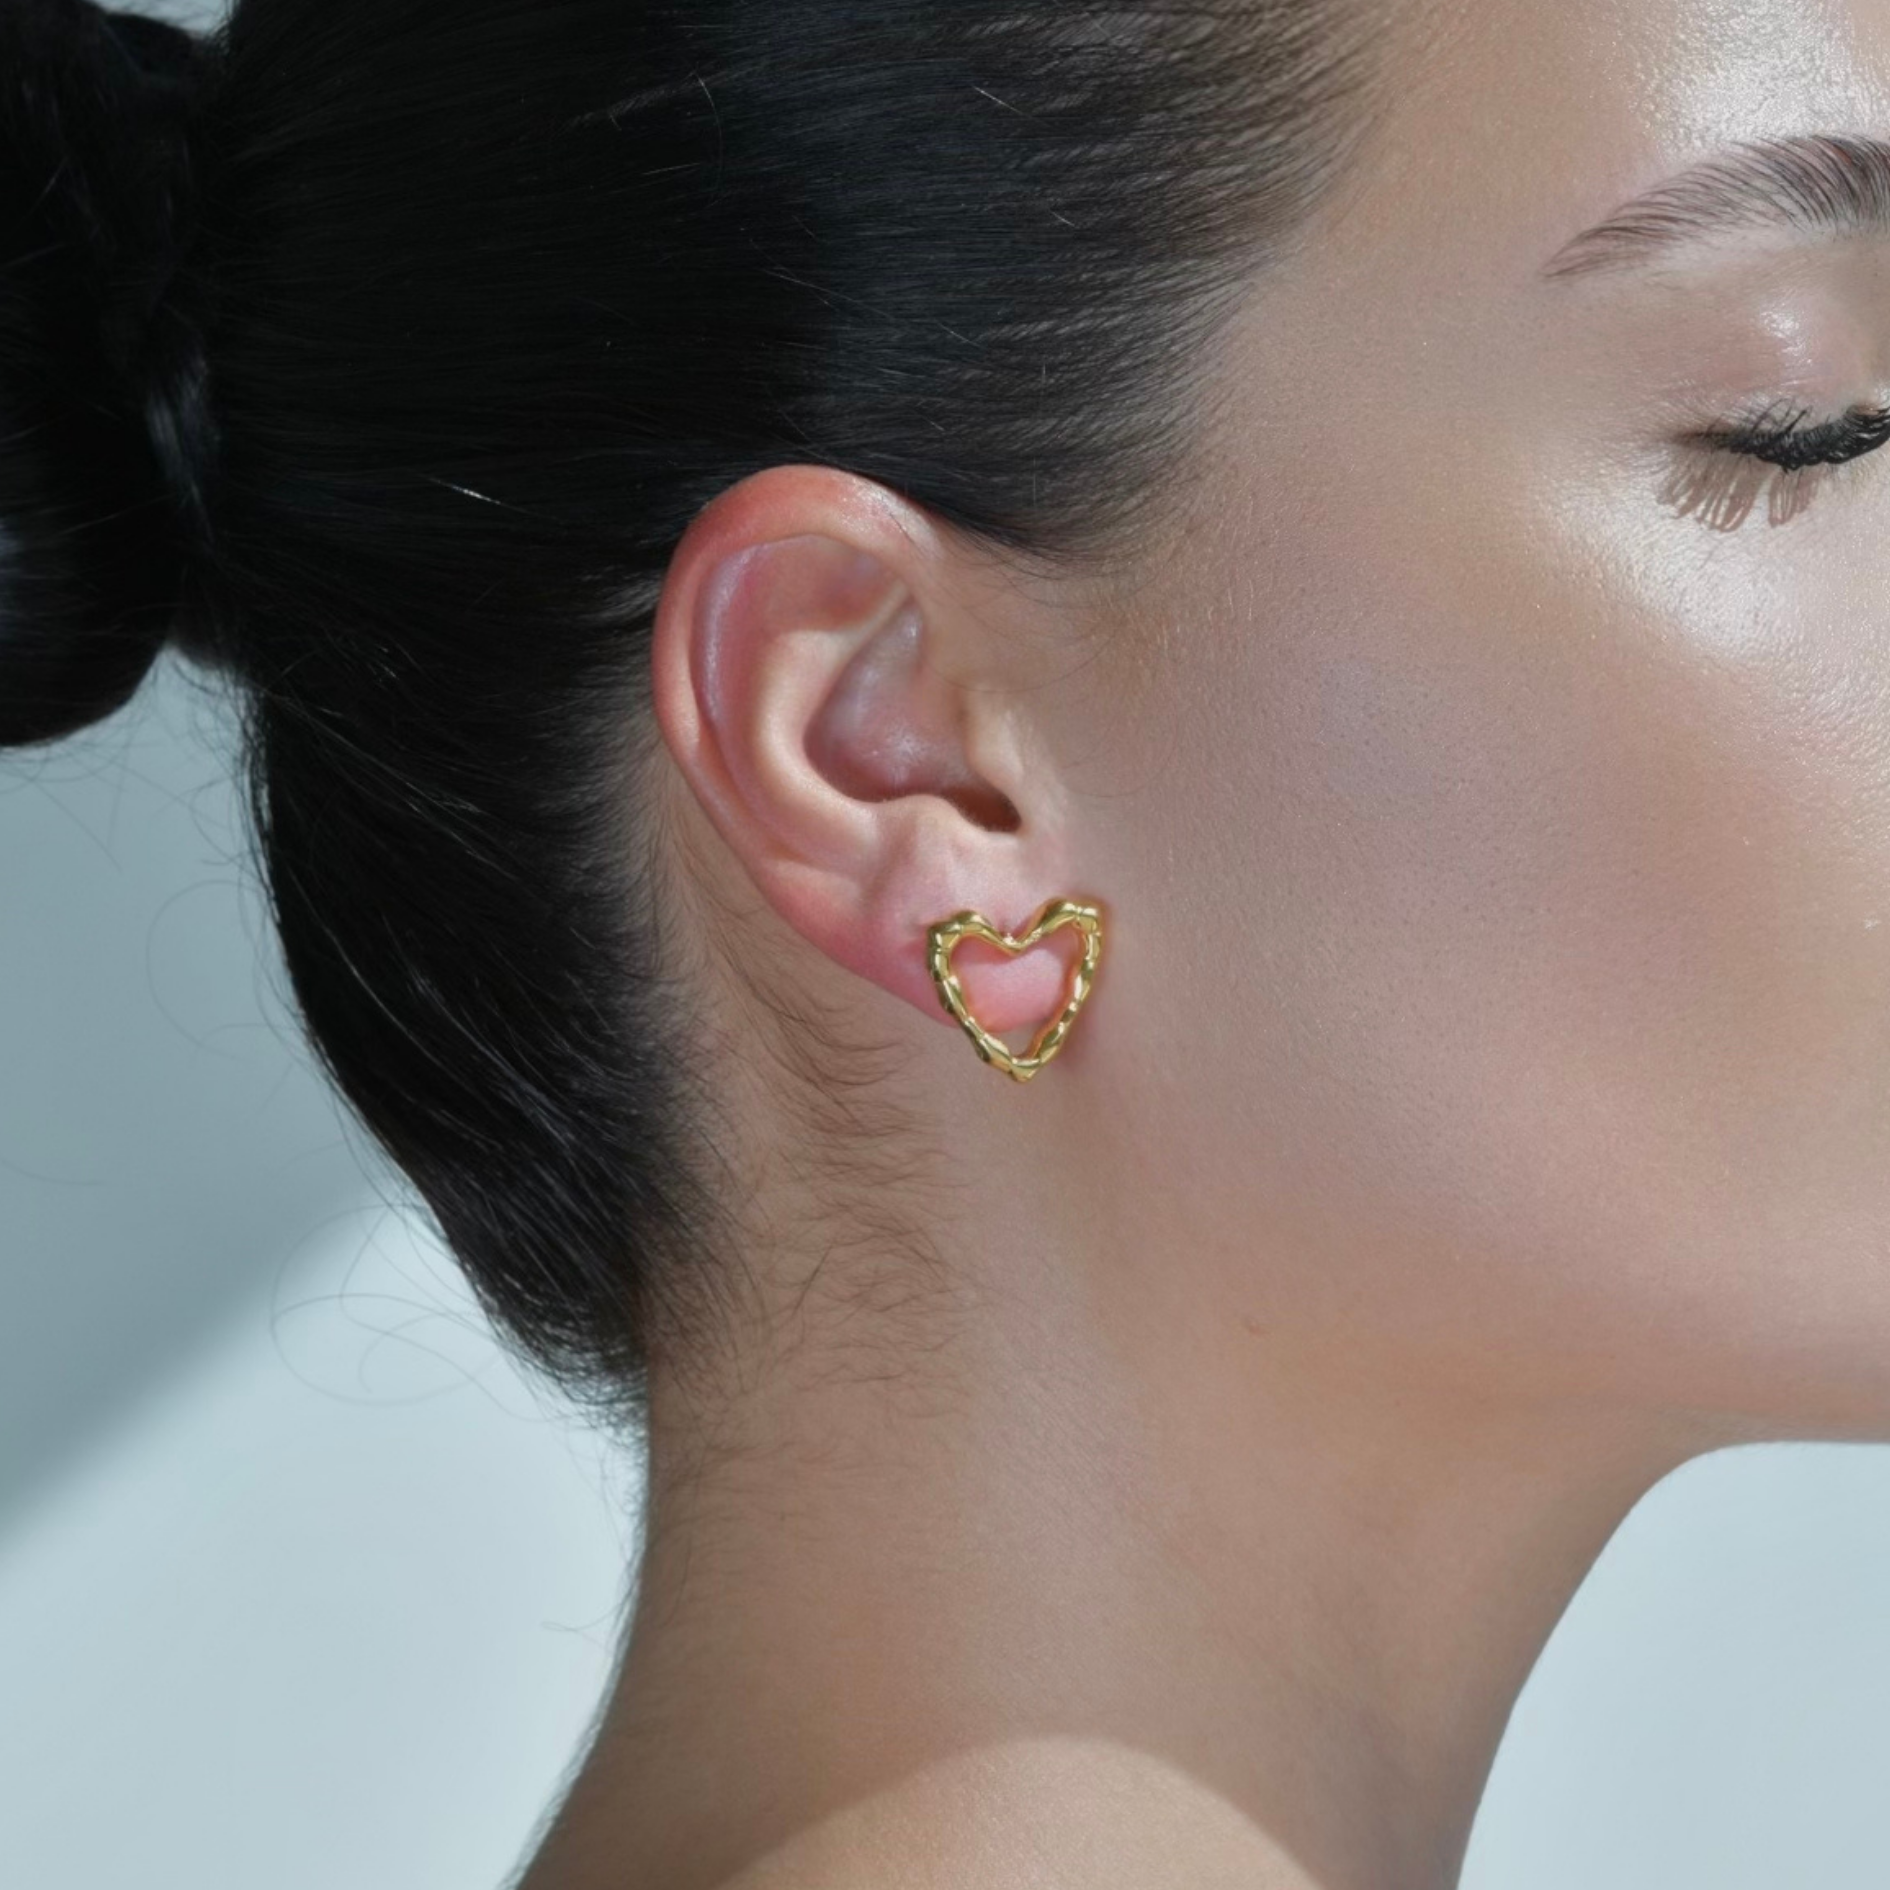 Woman wearing a Heart shape gold stud earrings. Irregular surface on the border of the heart shape.